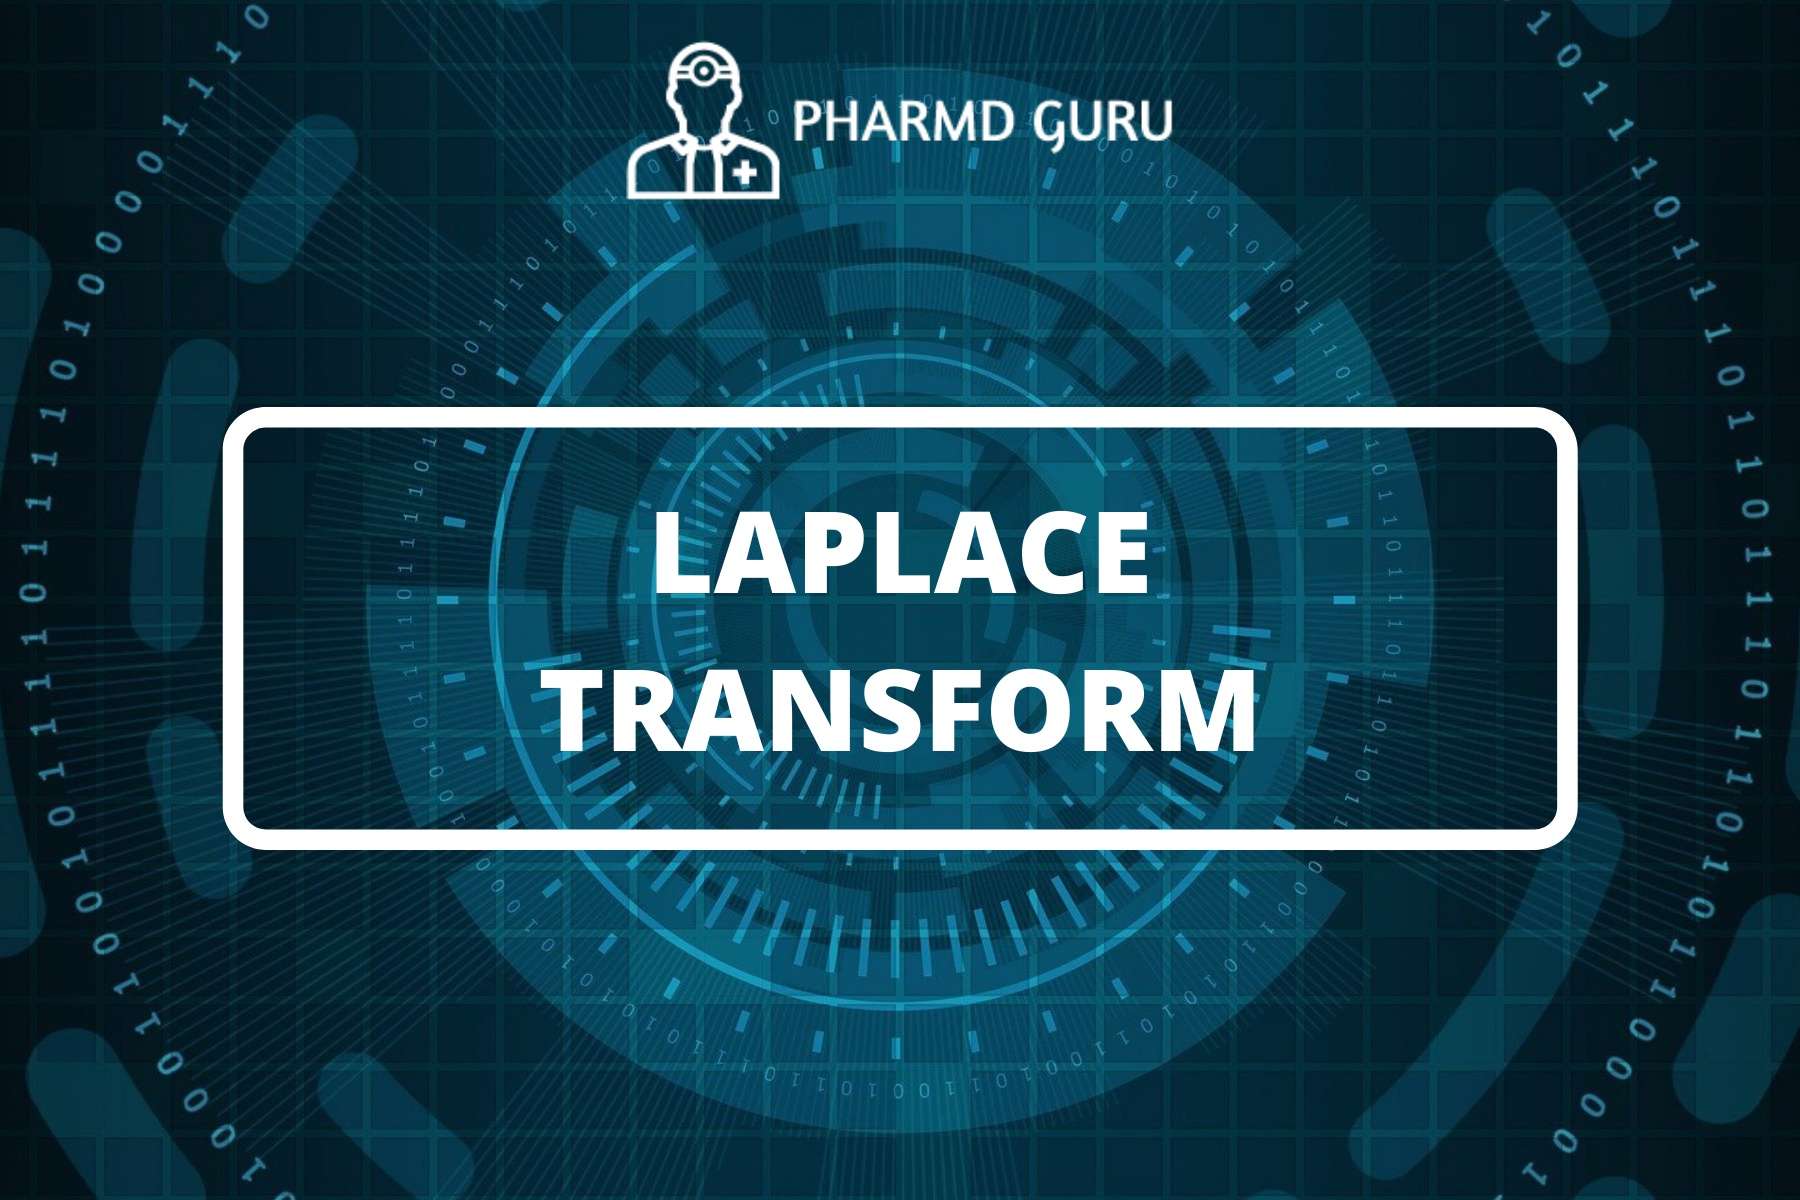 7. LAPLACE TRANSFORM - PHARMD GURU